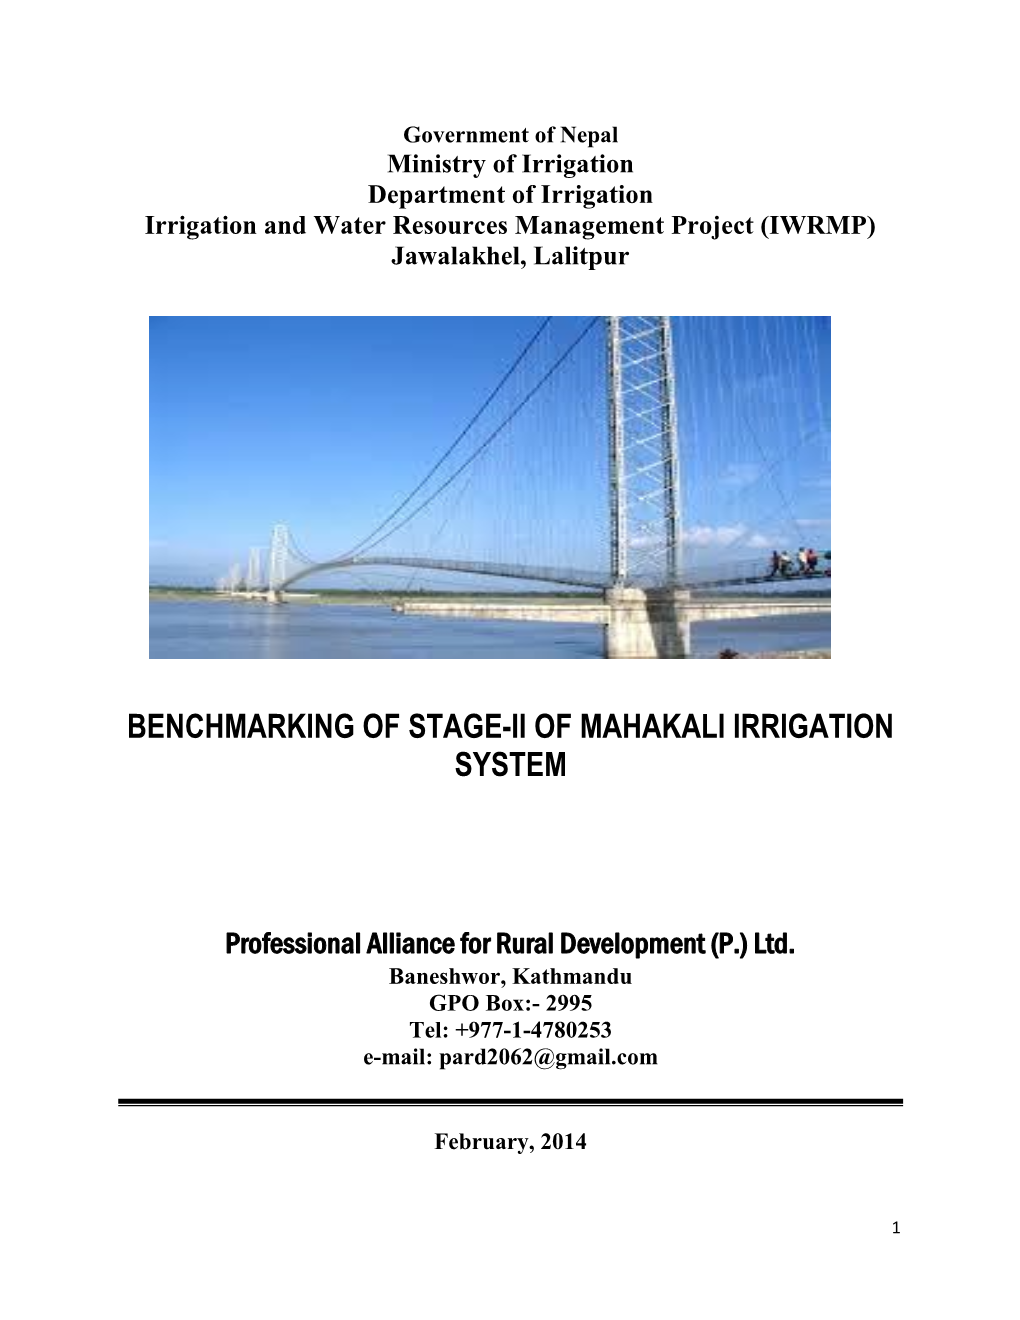 Benchmarking of Stage-Ii of Mahakali Irrigation System